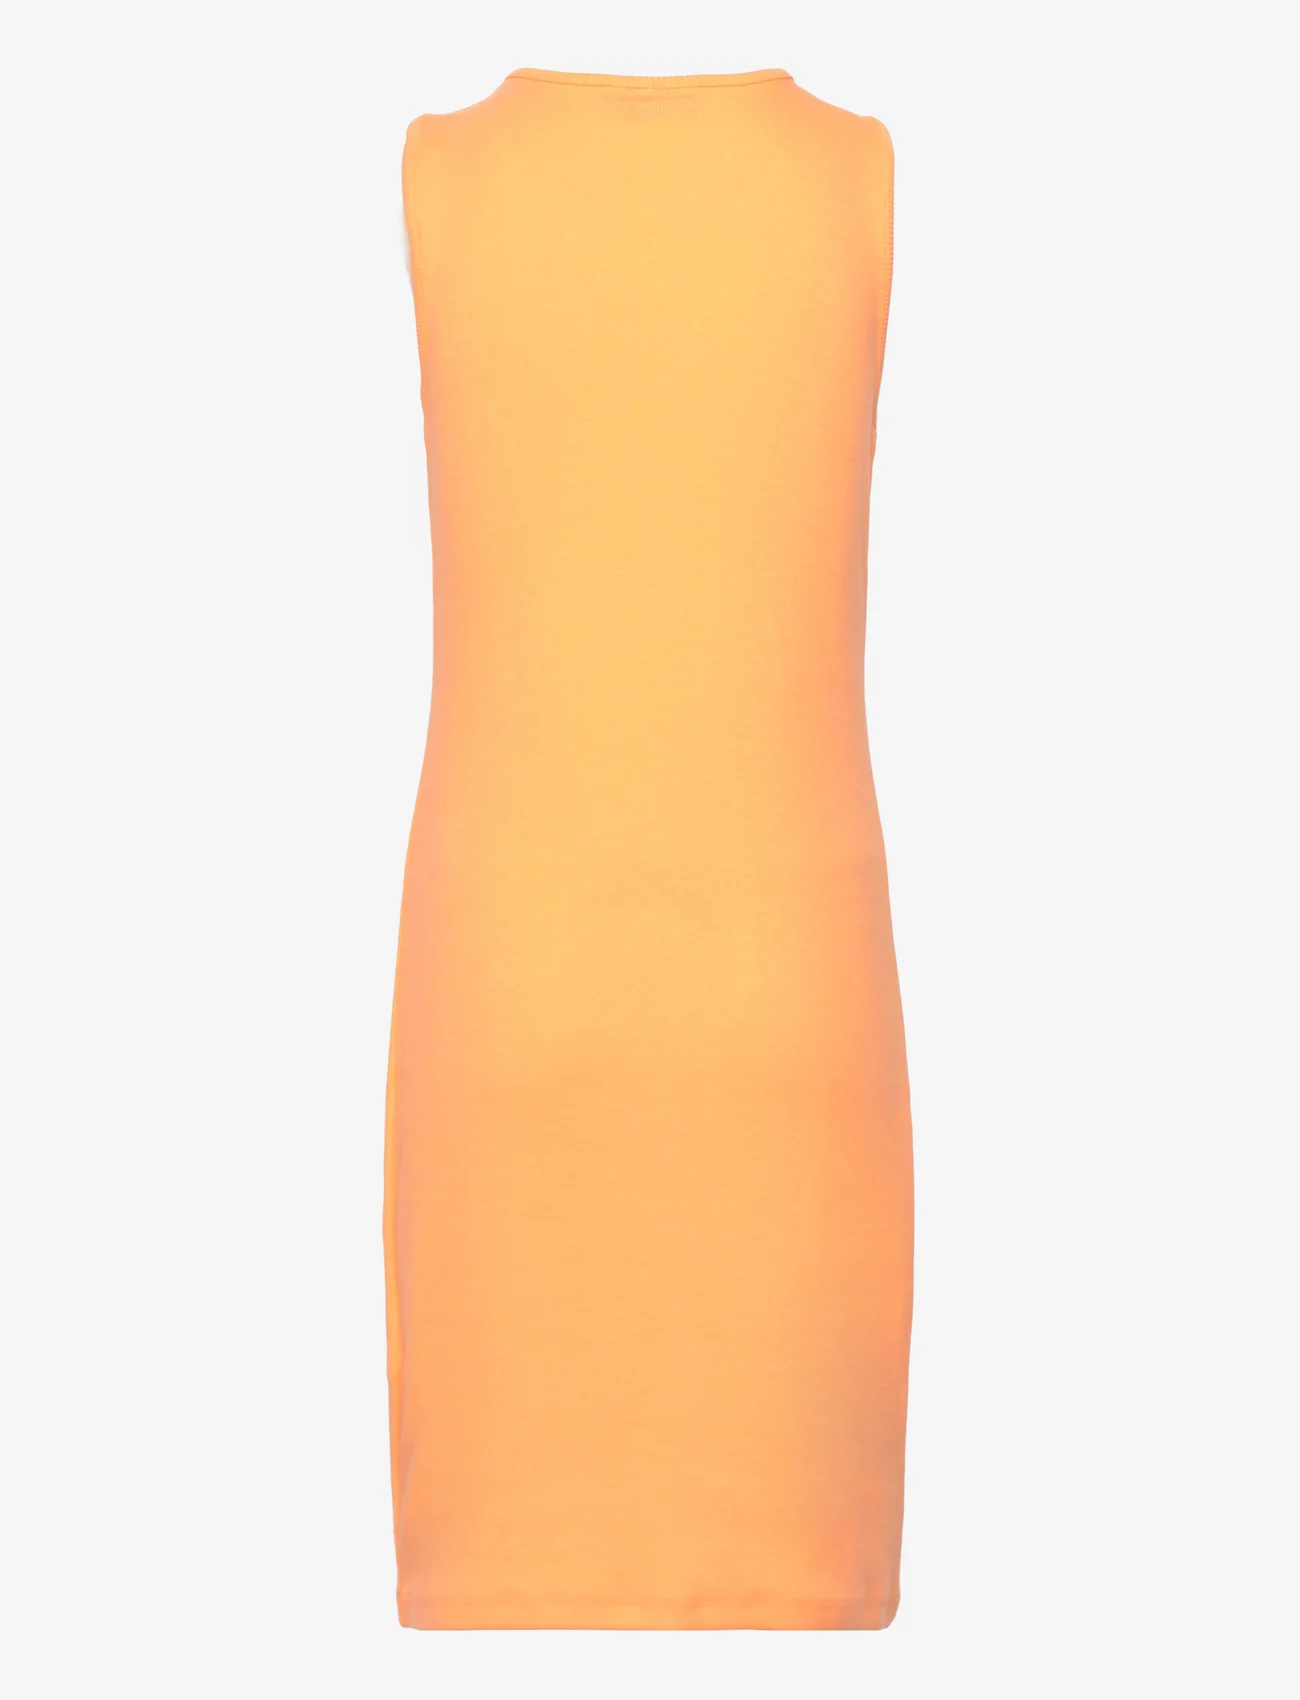 LMTD - NLFDIDACUT TANK DRESS - sleeveless casual dresses - papaya - 1